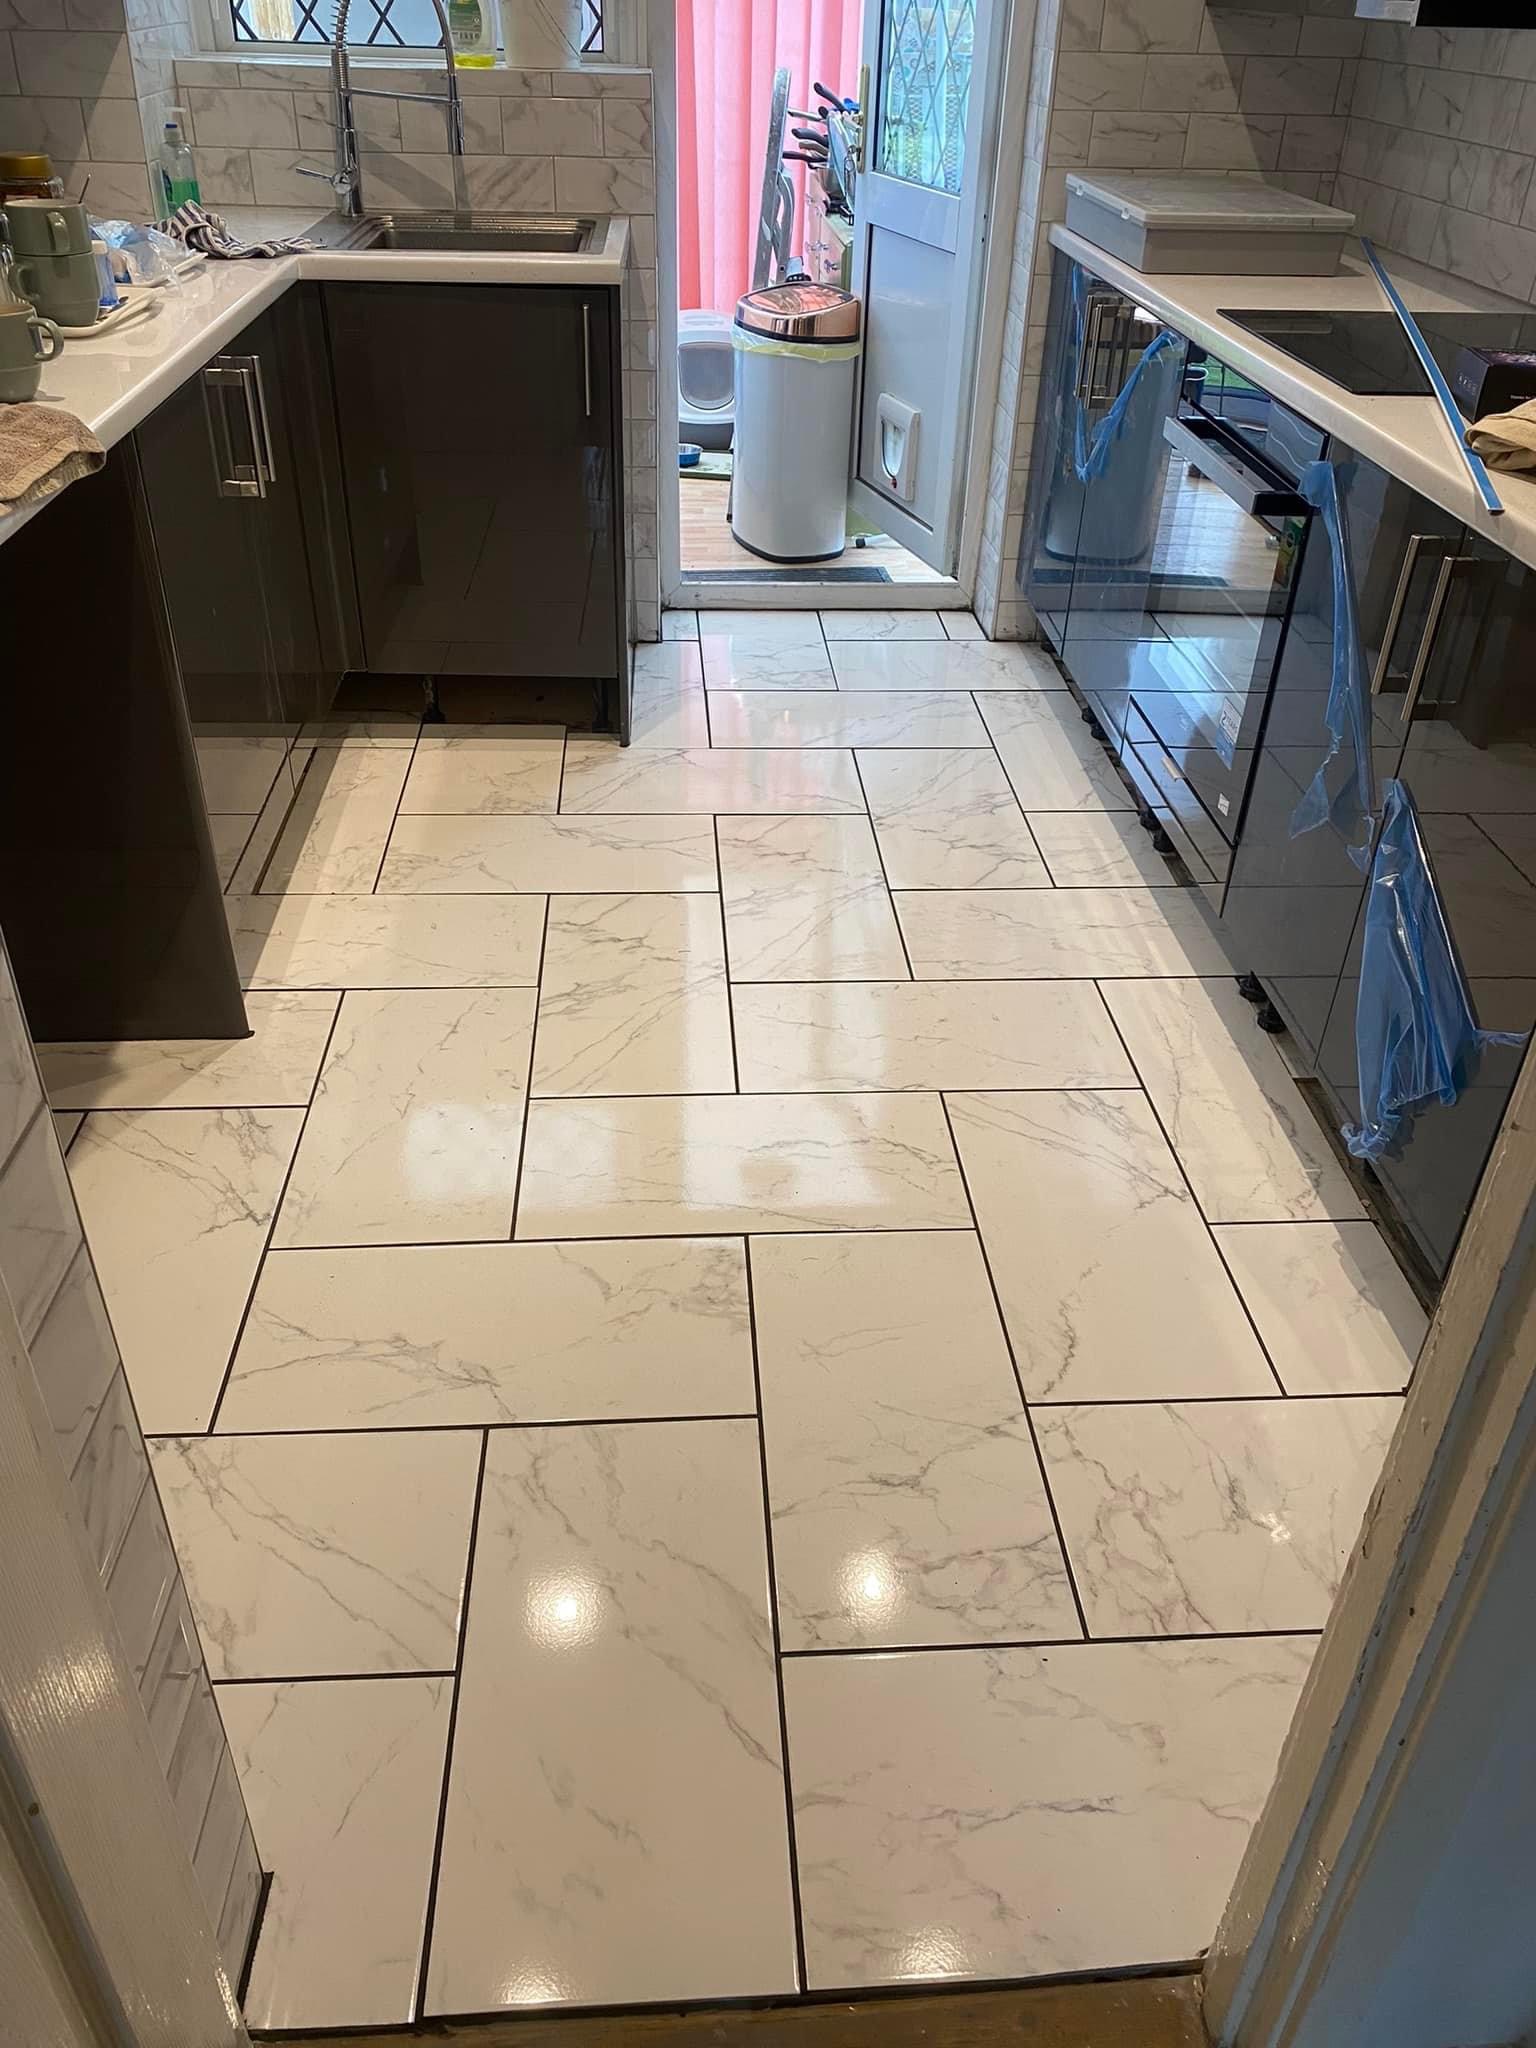 Complete kitchen renovation and floor tiling